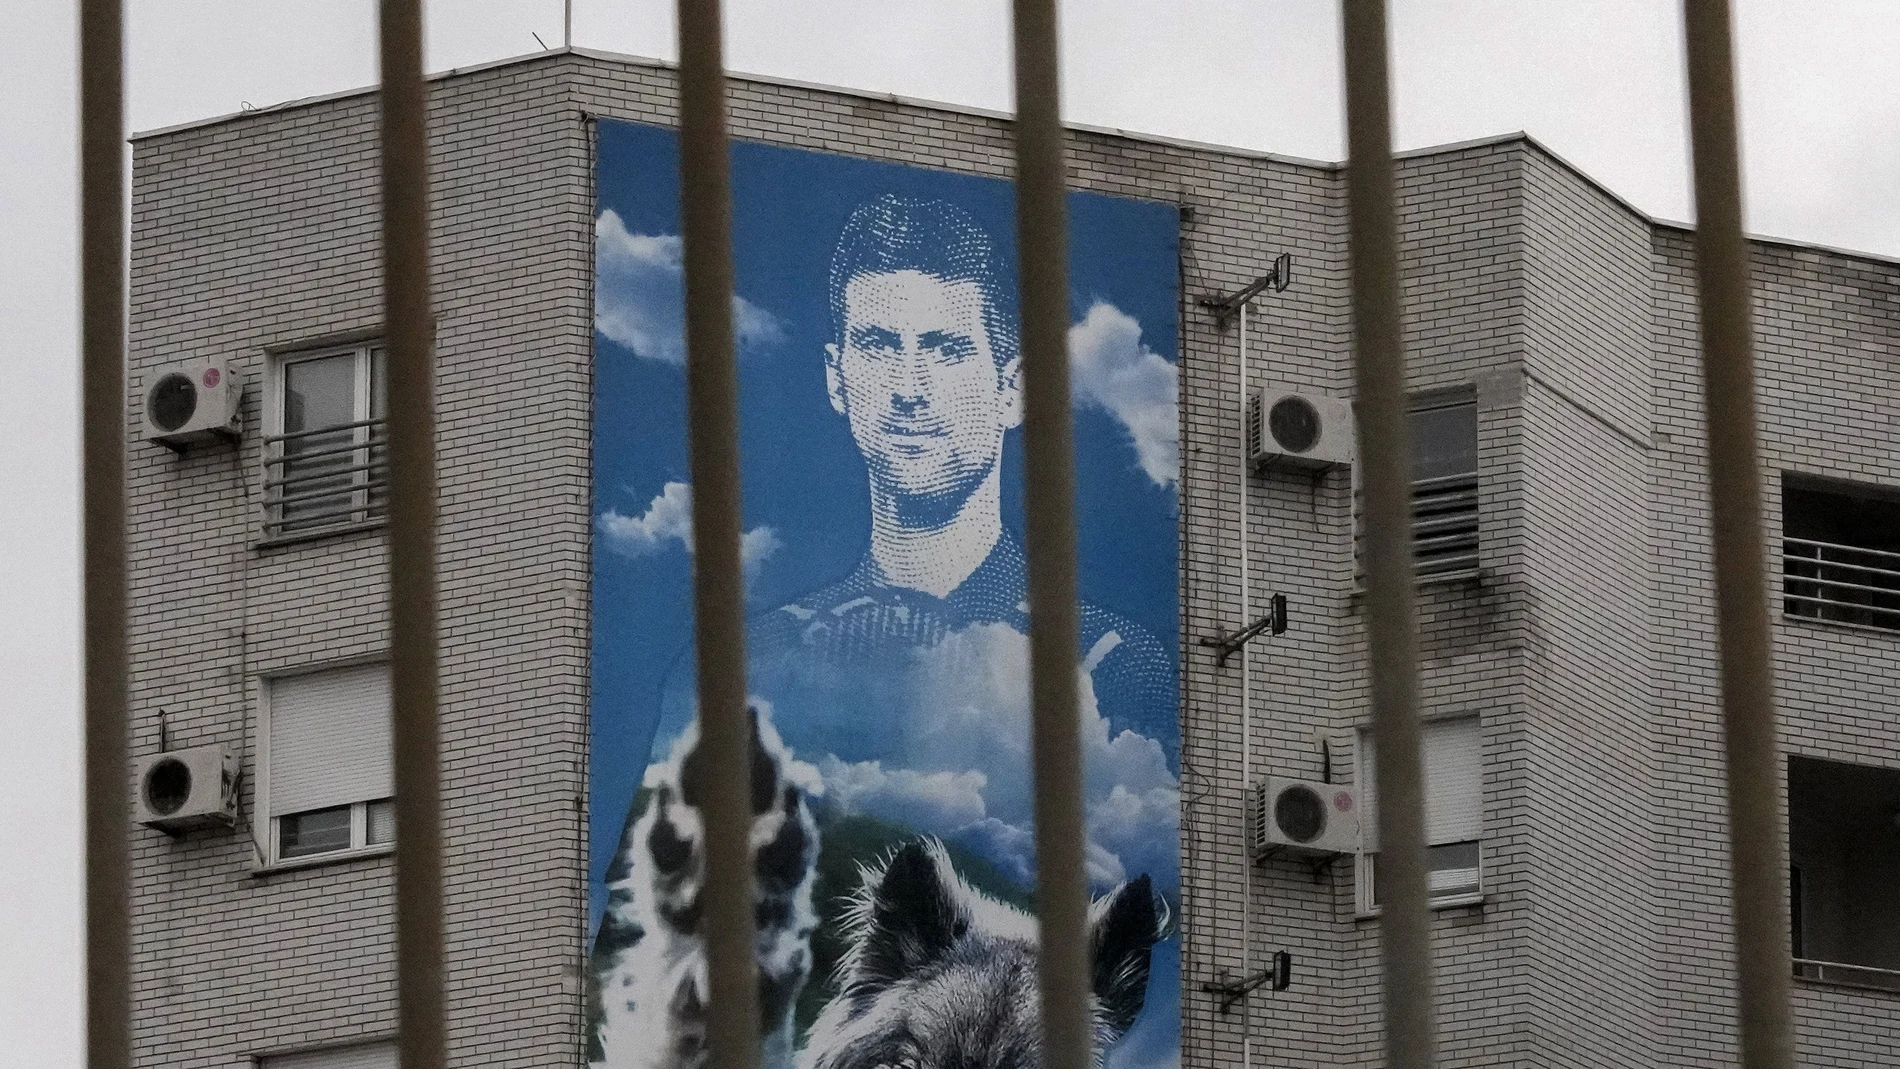 Mural de Novak Djokovic en un edificio de Belgrado